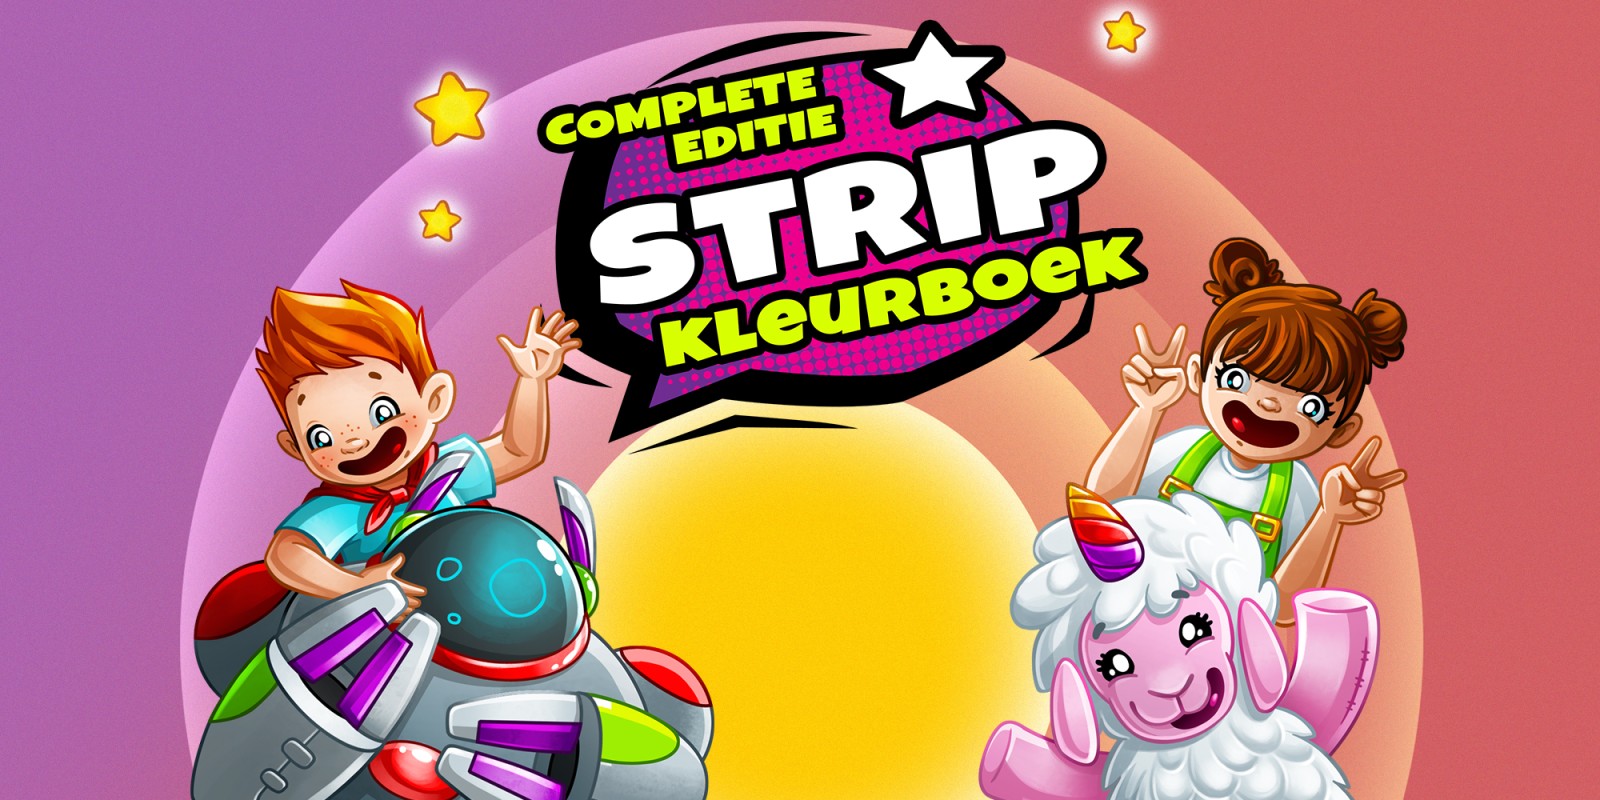 Strip Kleurboek - Complete Editie